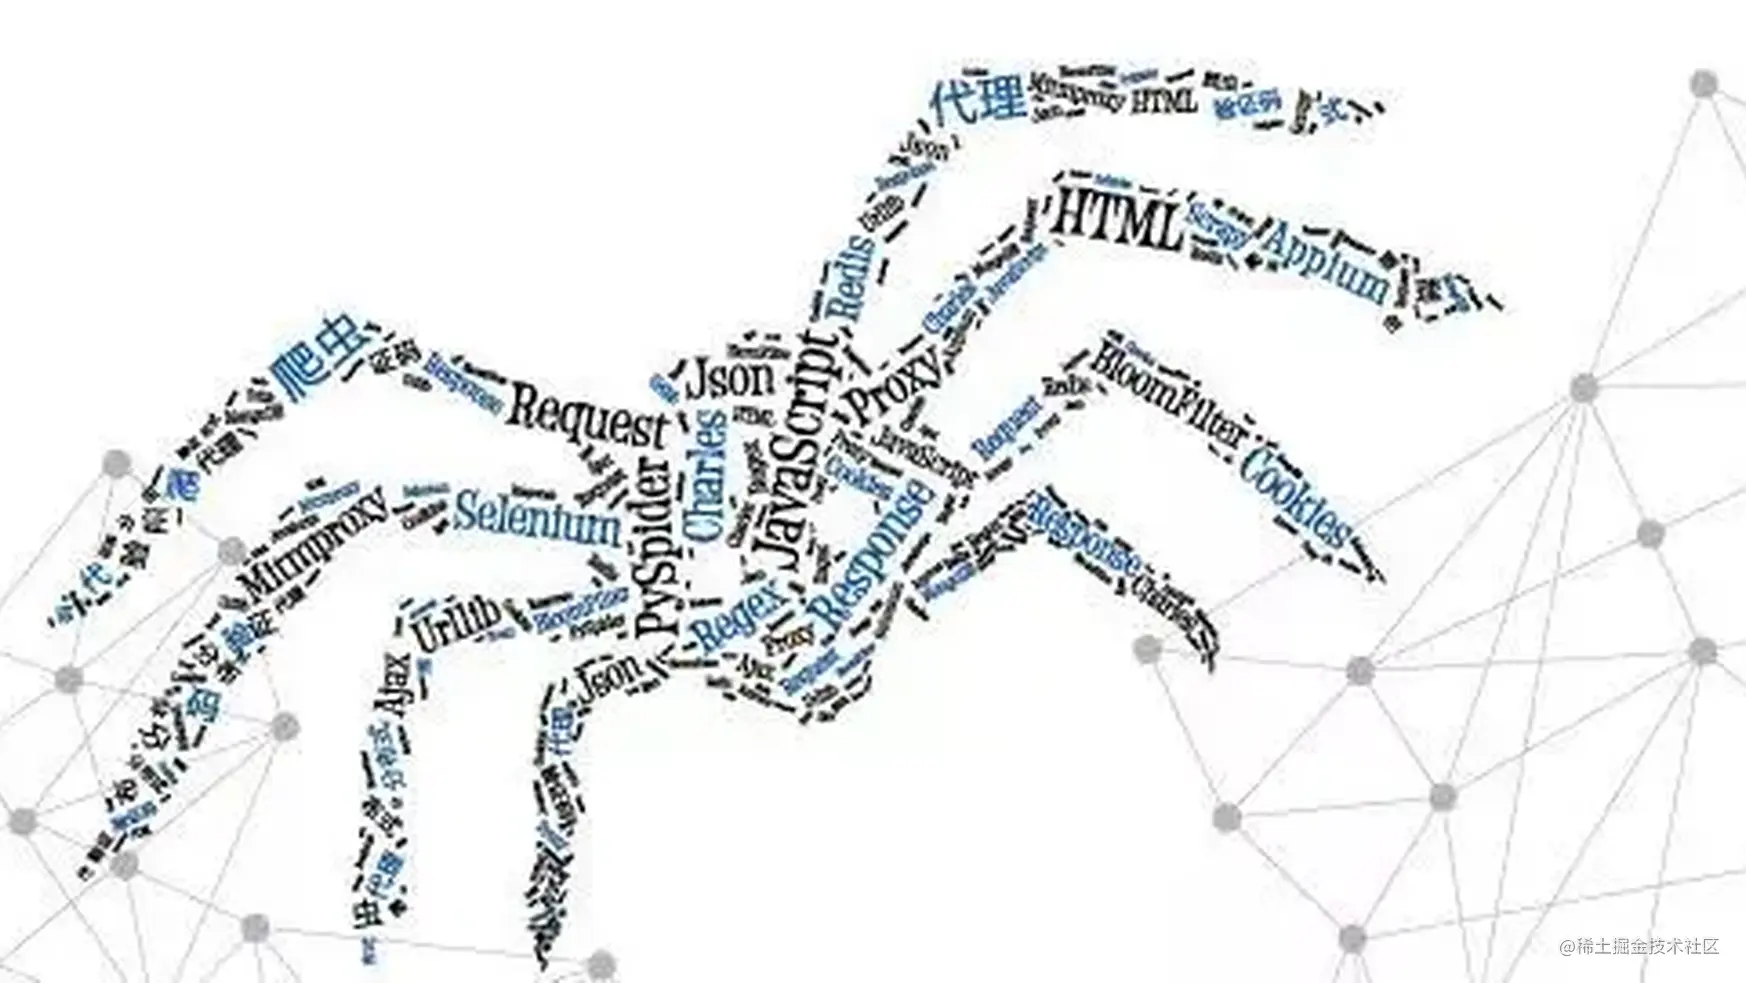 Java网络爬虫- WebMagic 框架的使用 | 8月更文挑战